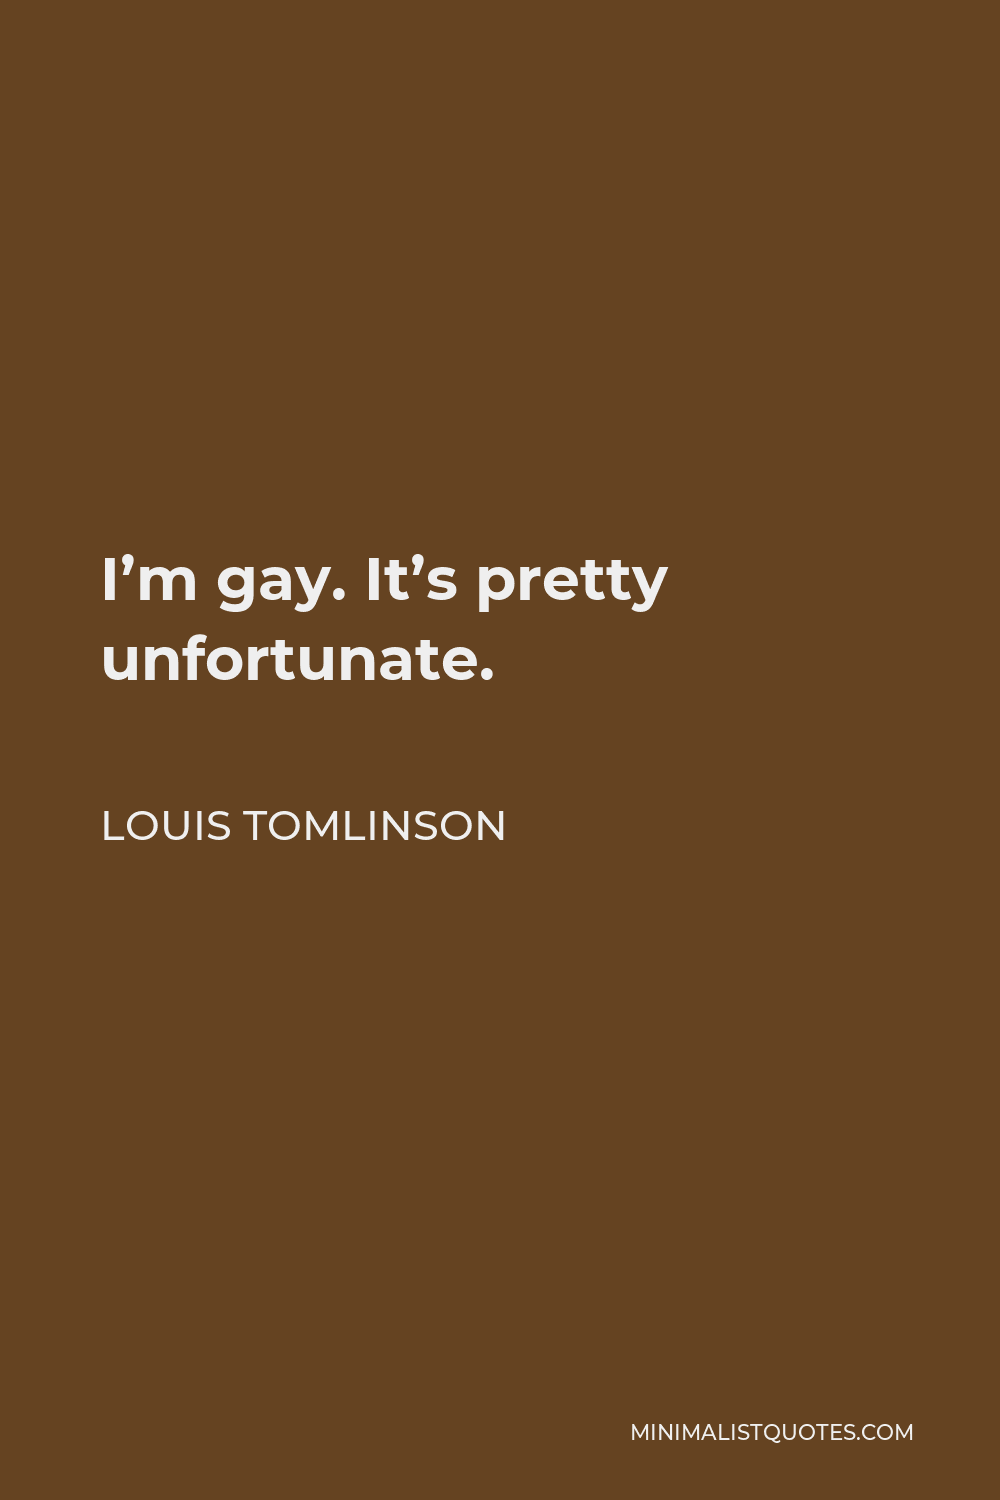 Louis Tomlinson Quote - I’m gay. It’s pretty unfortunate.